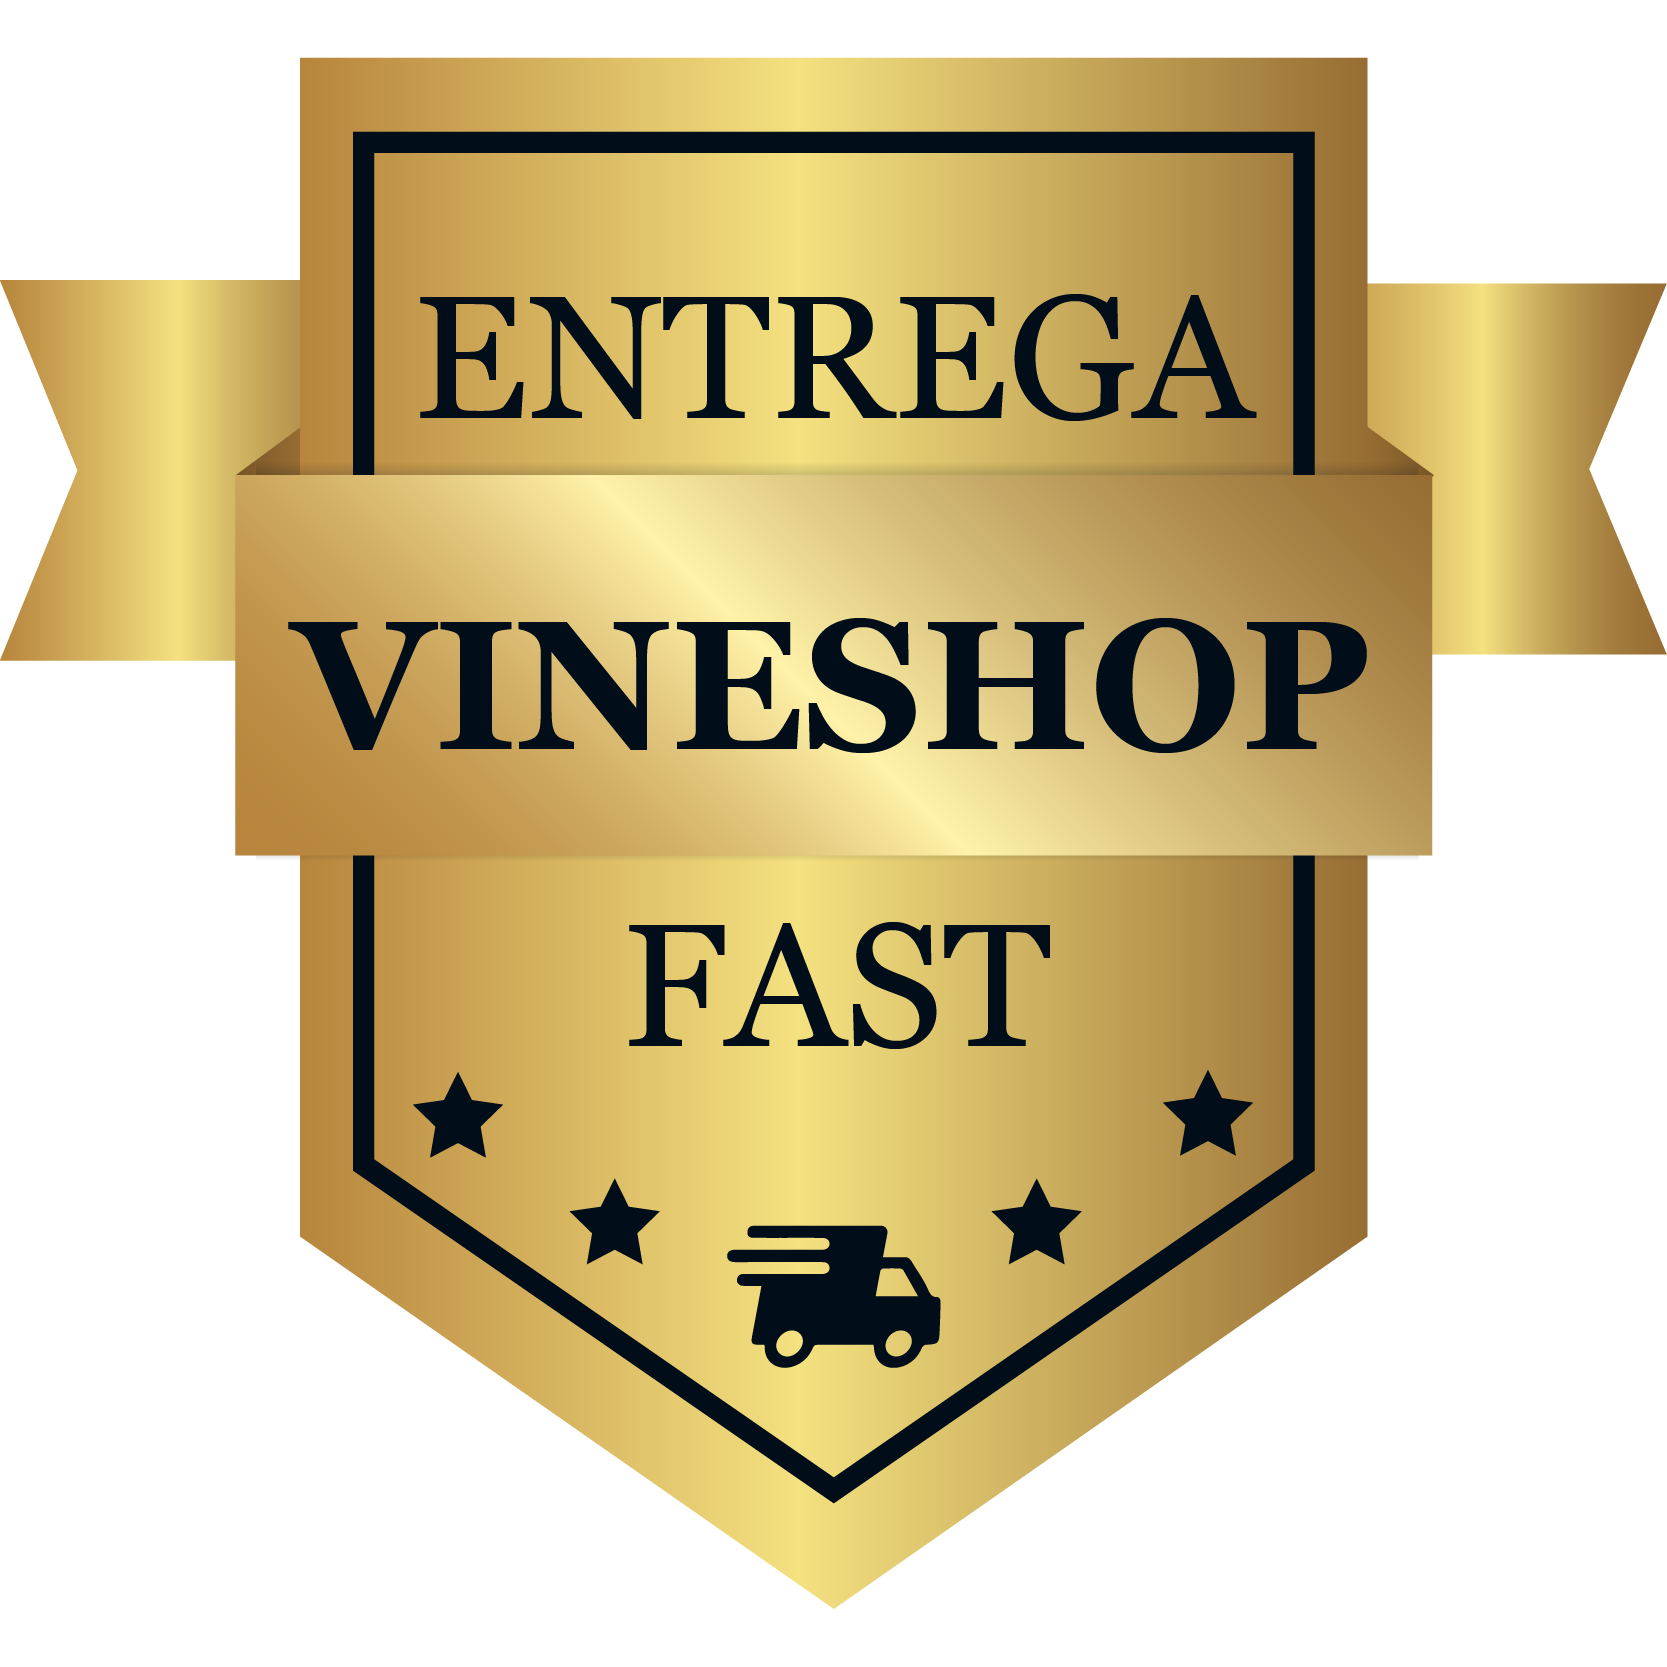 Entrega Vineshop Fast